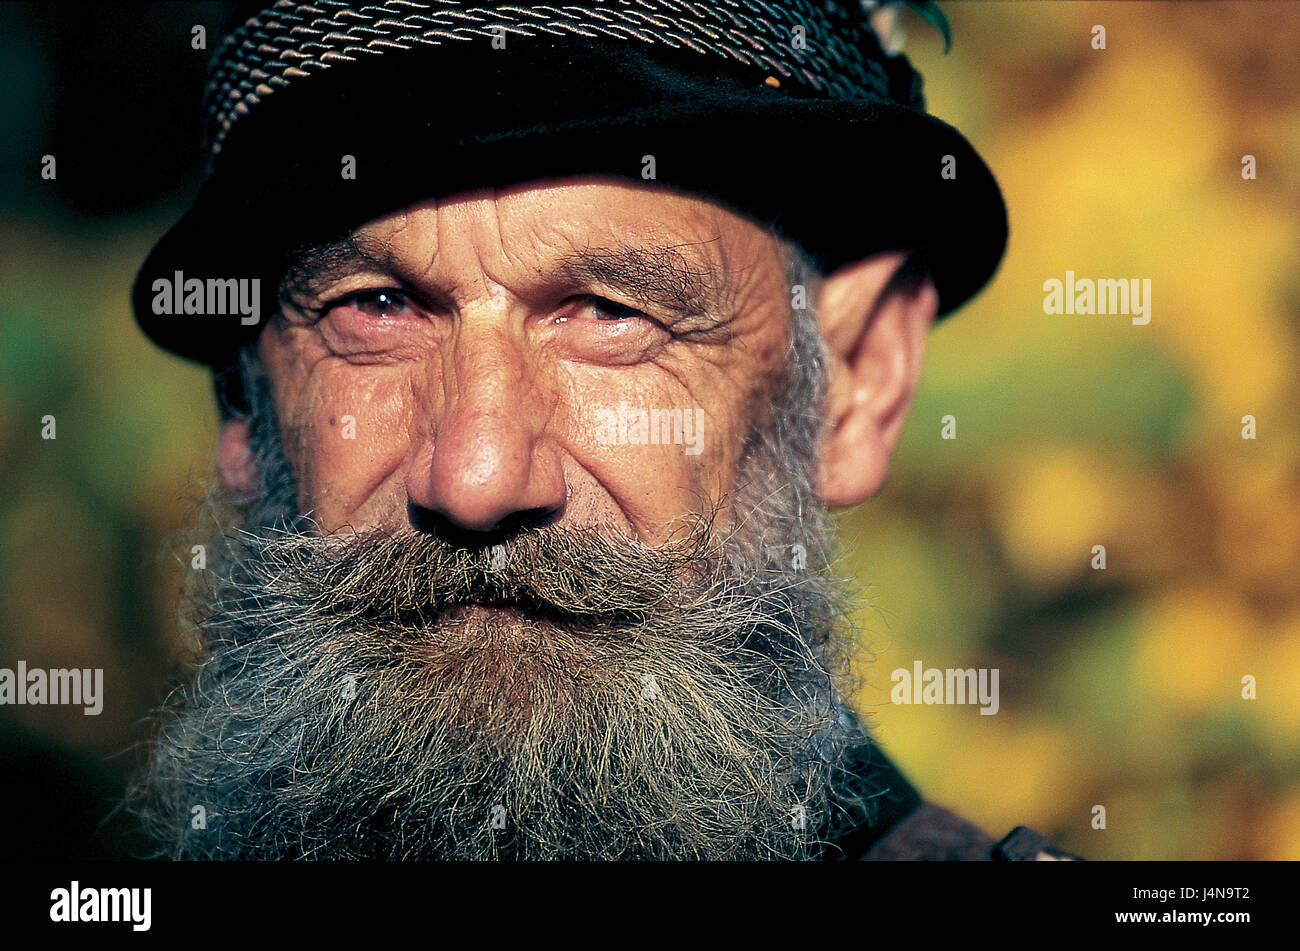 Germany, Bavaria, local, man, portrait, medium close-up Stock Photo